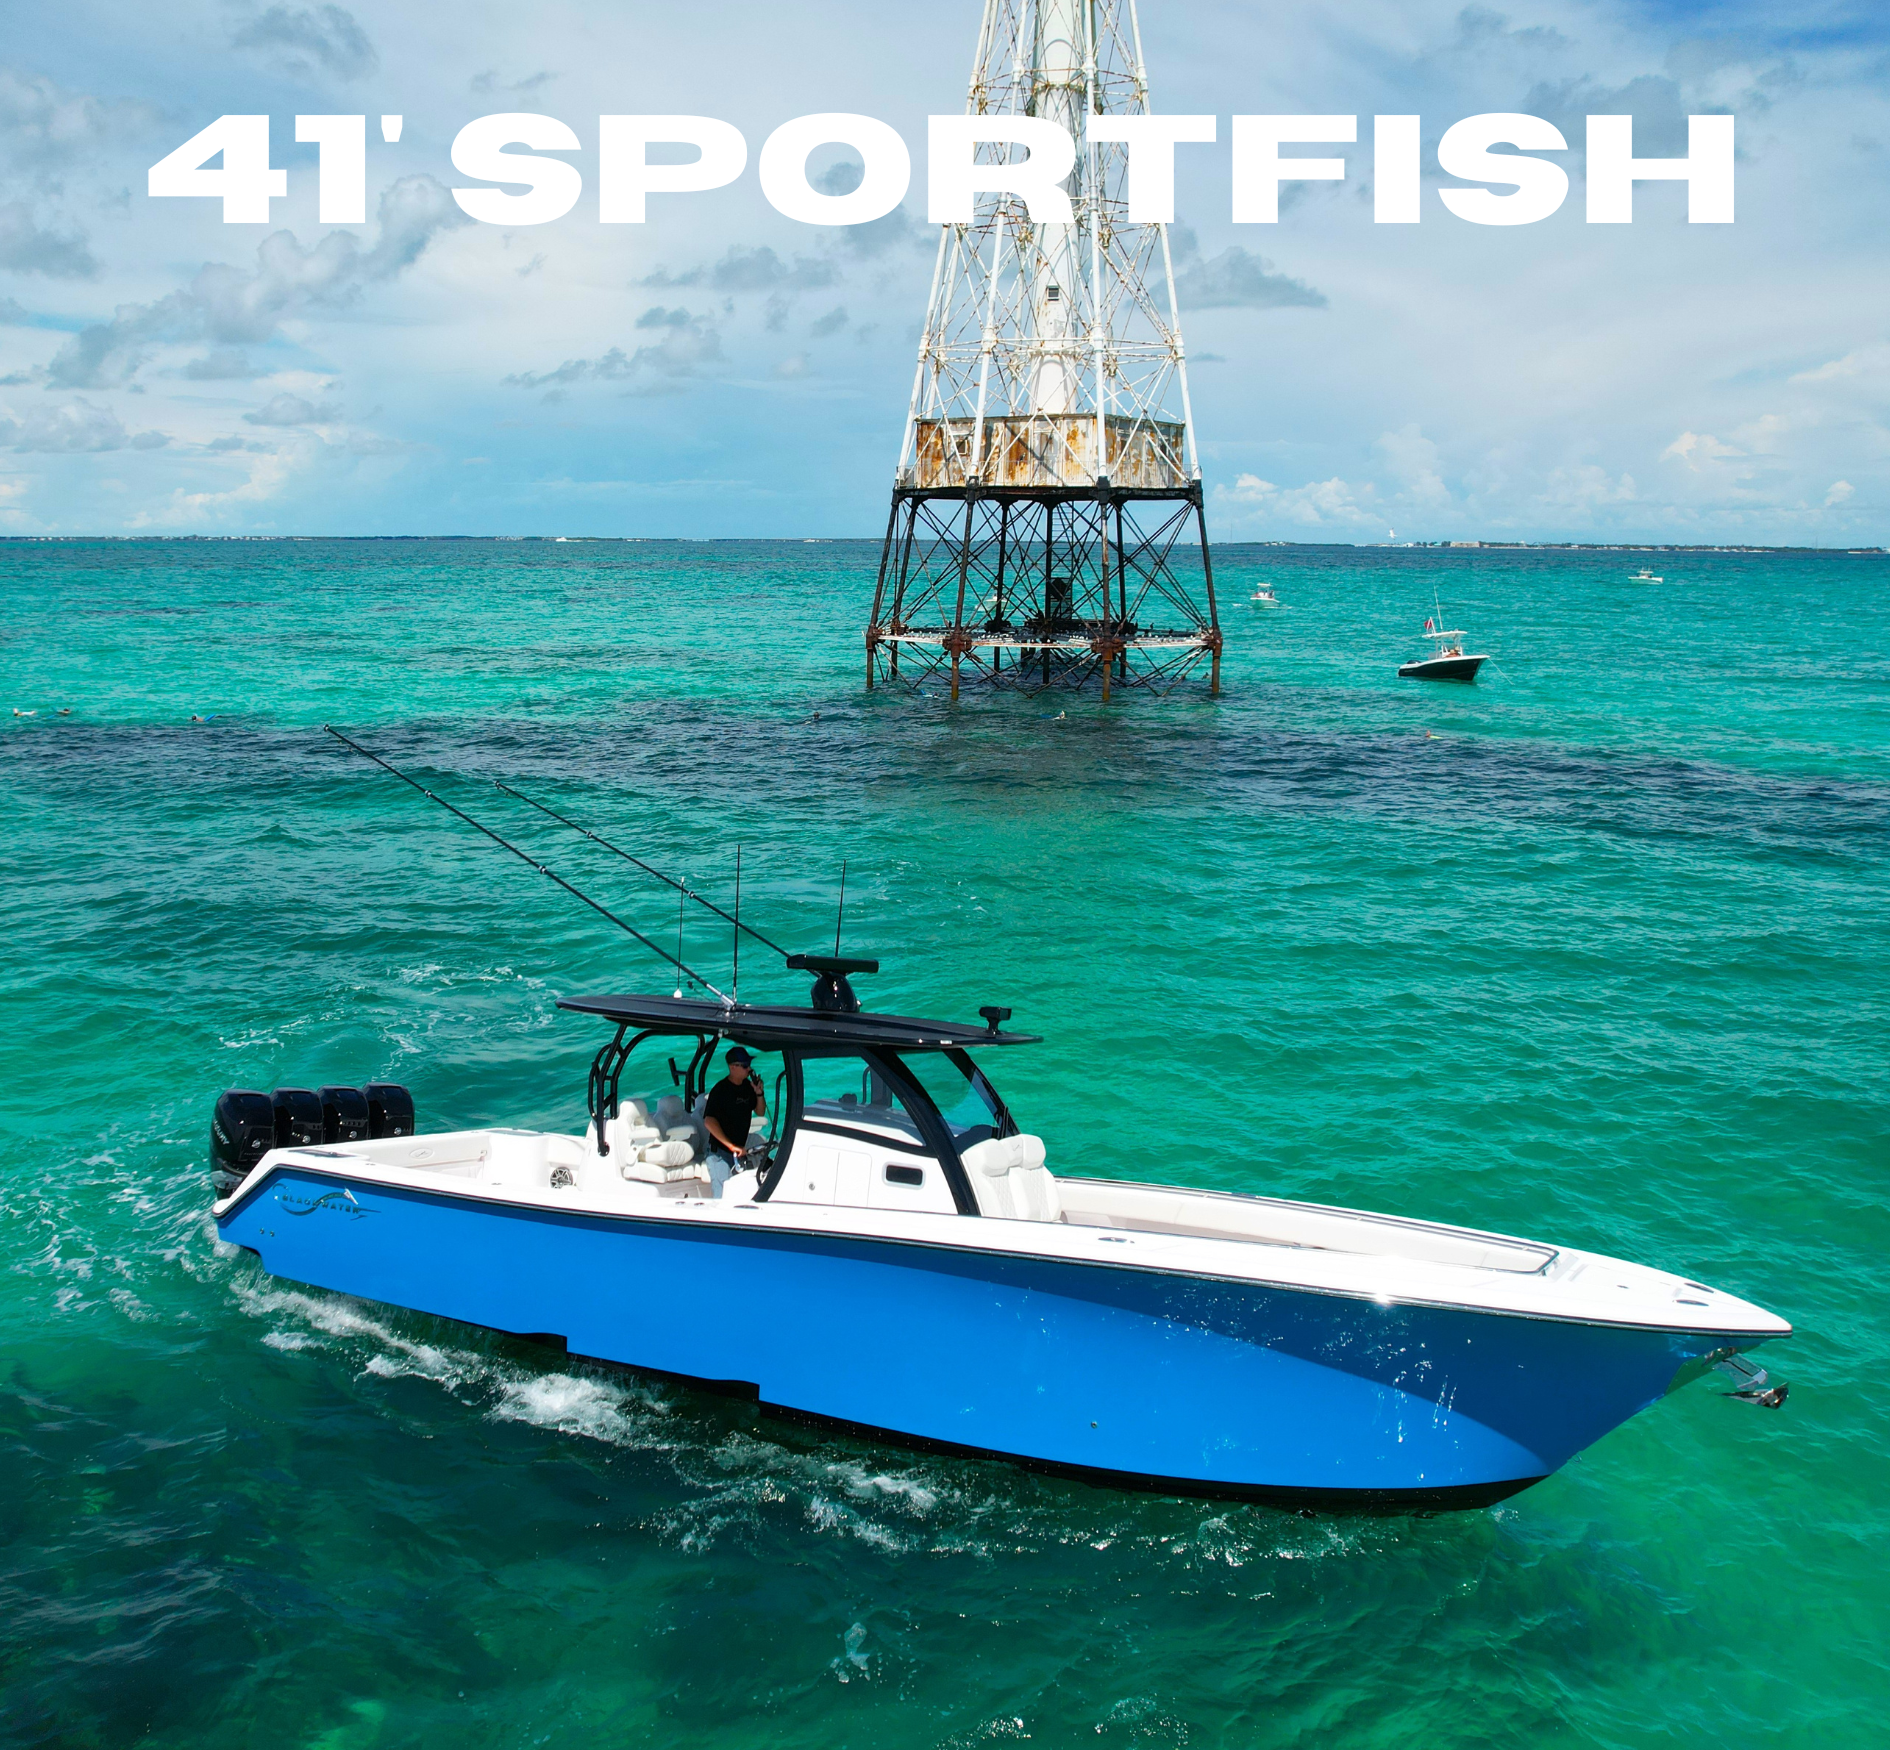 43' Sportfish (2)